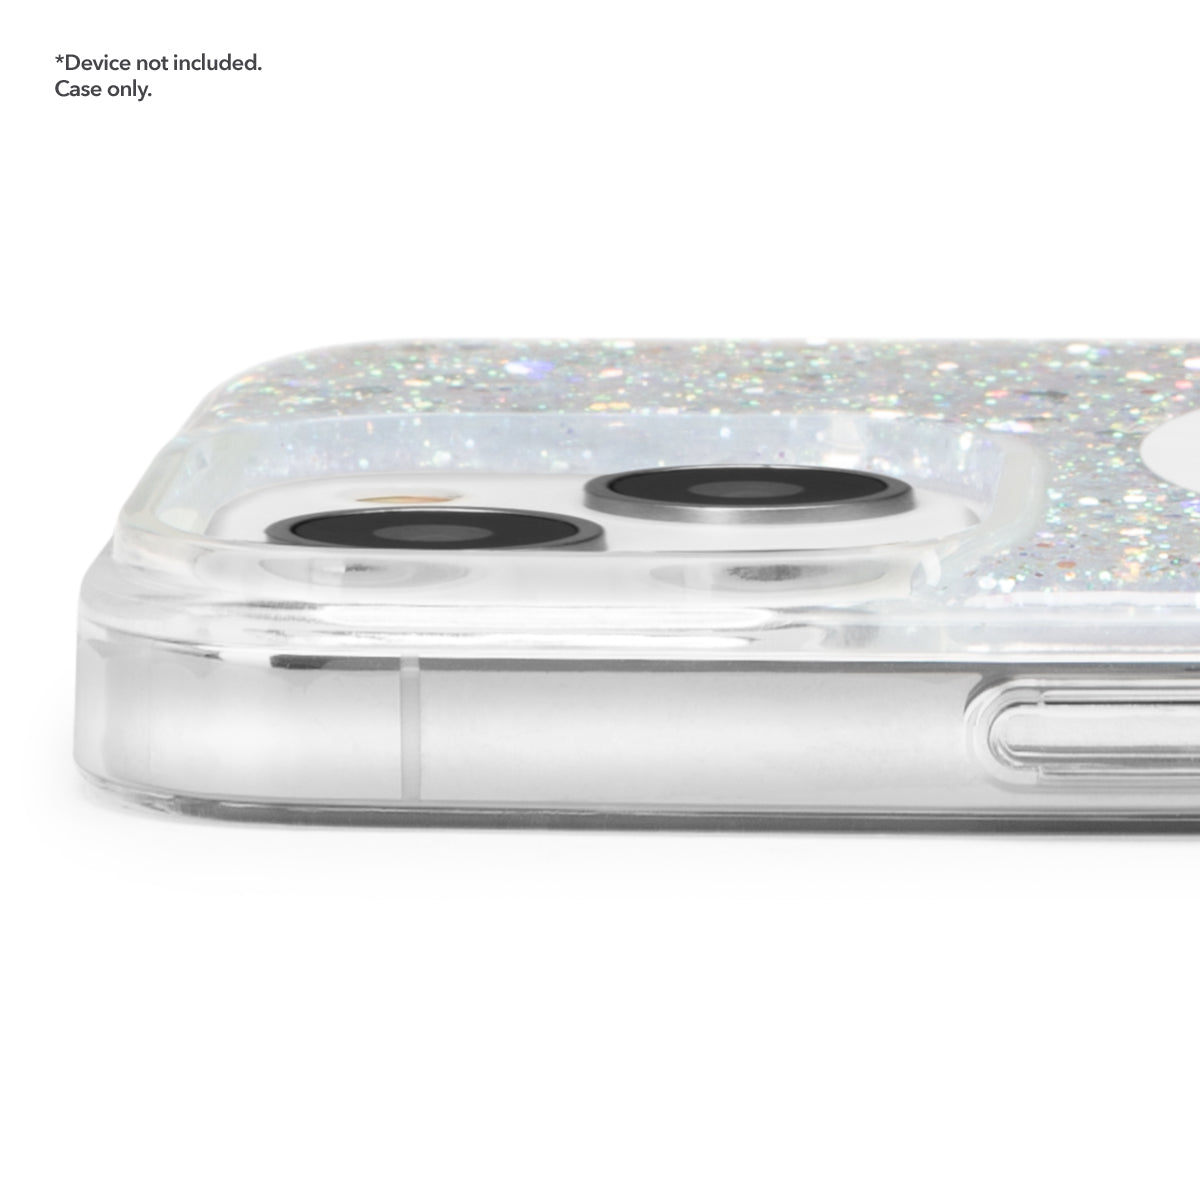 Showcase Slim Glam - iPhone 15 Plus Silver w/ MagSafe Cases